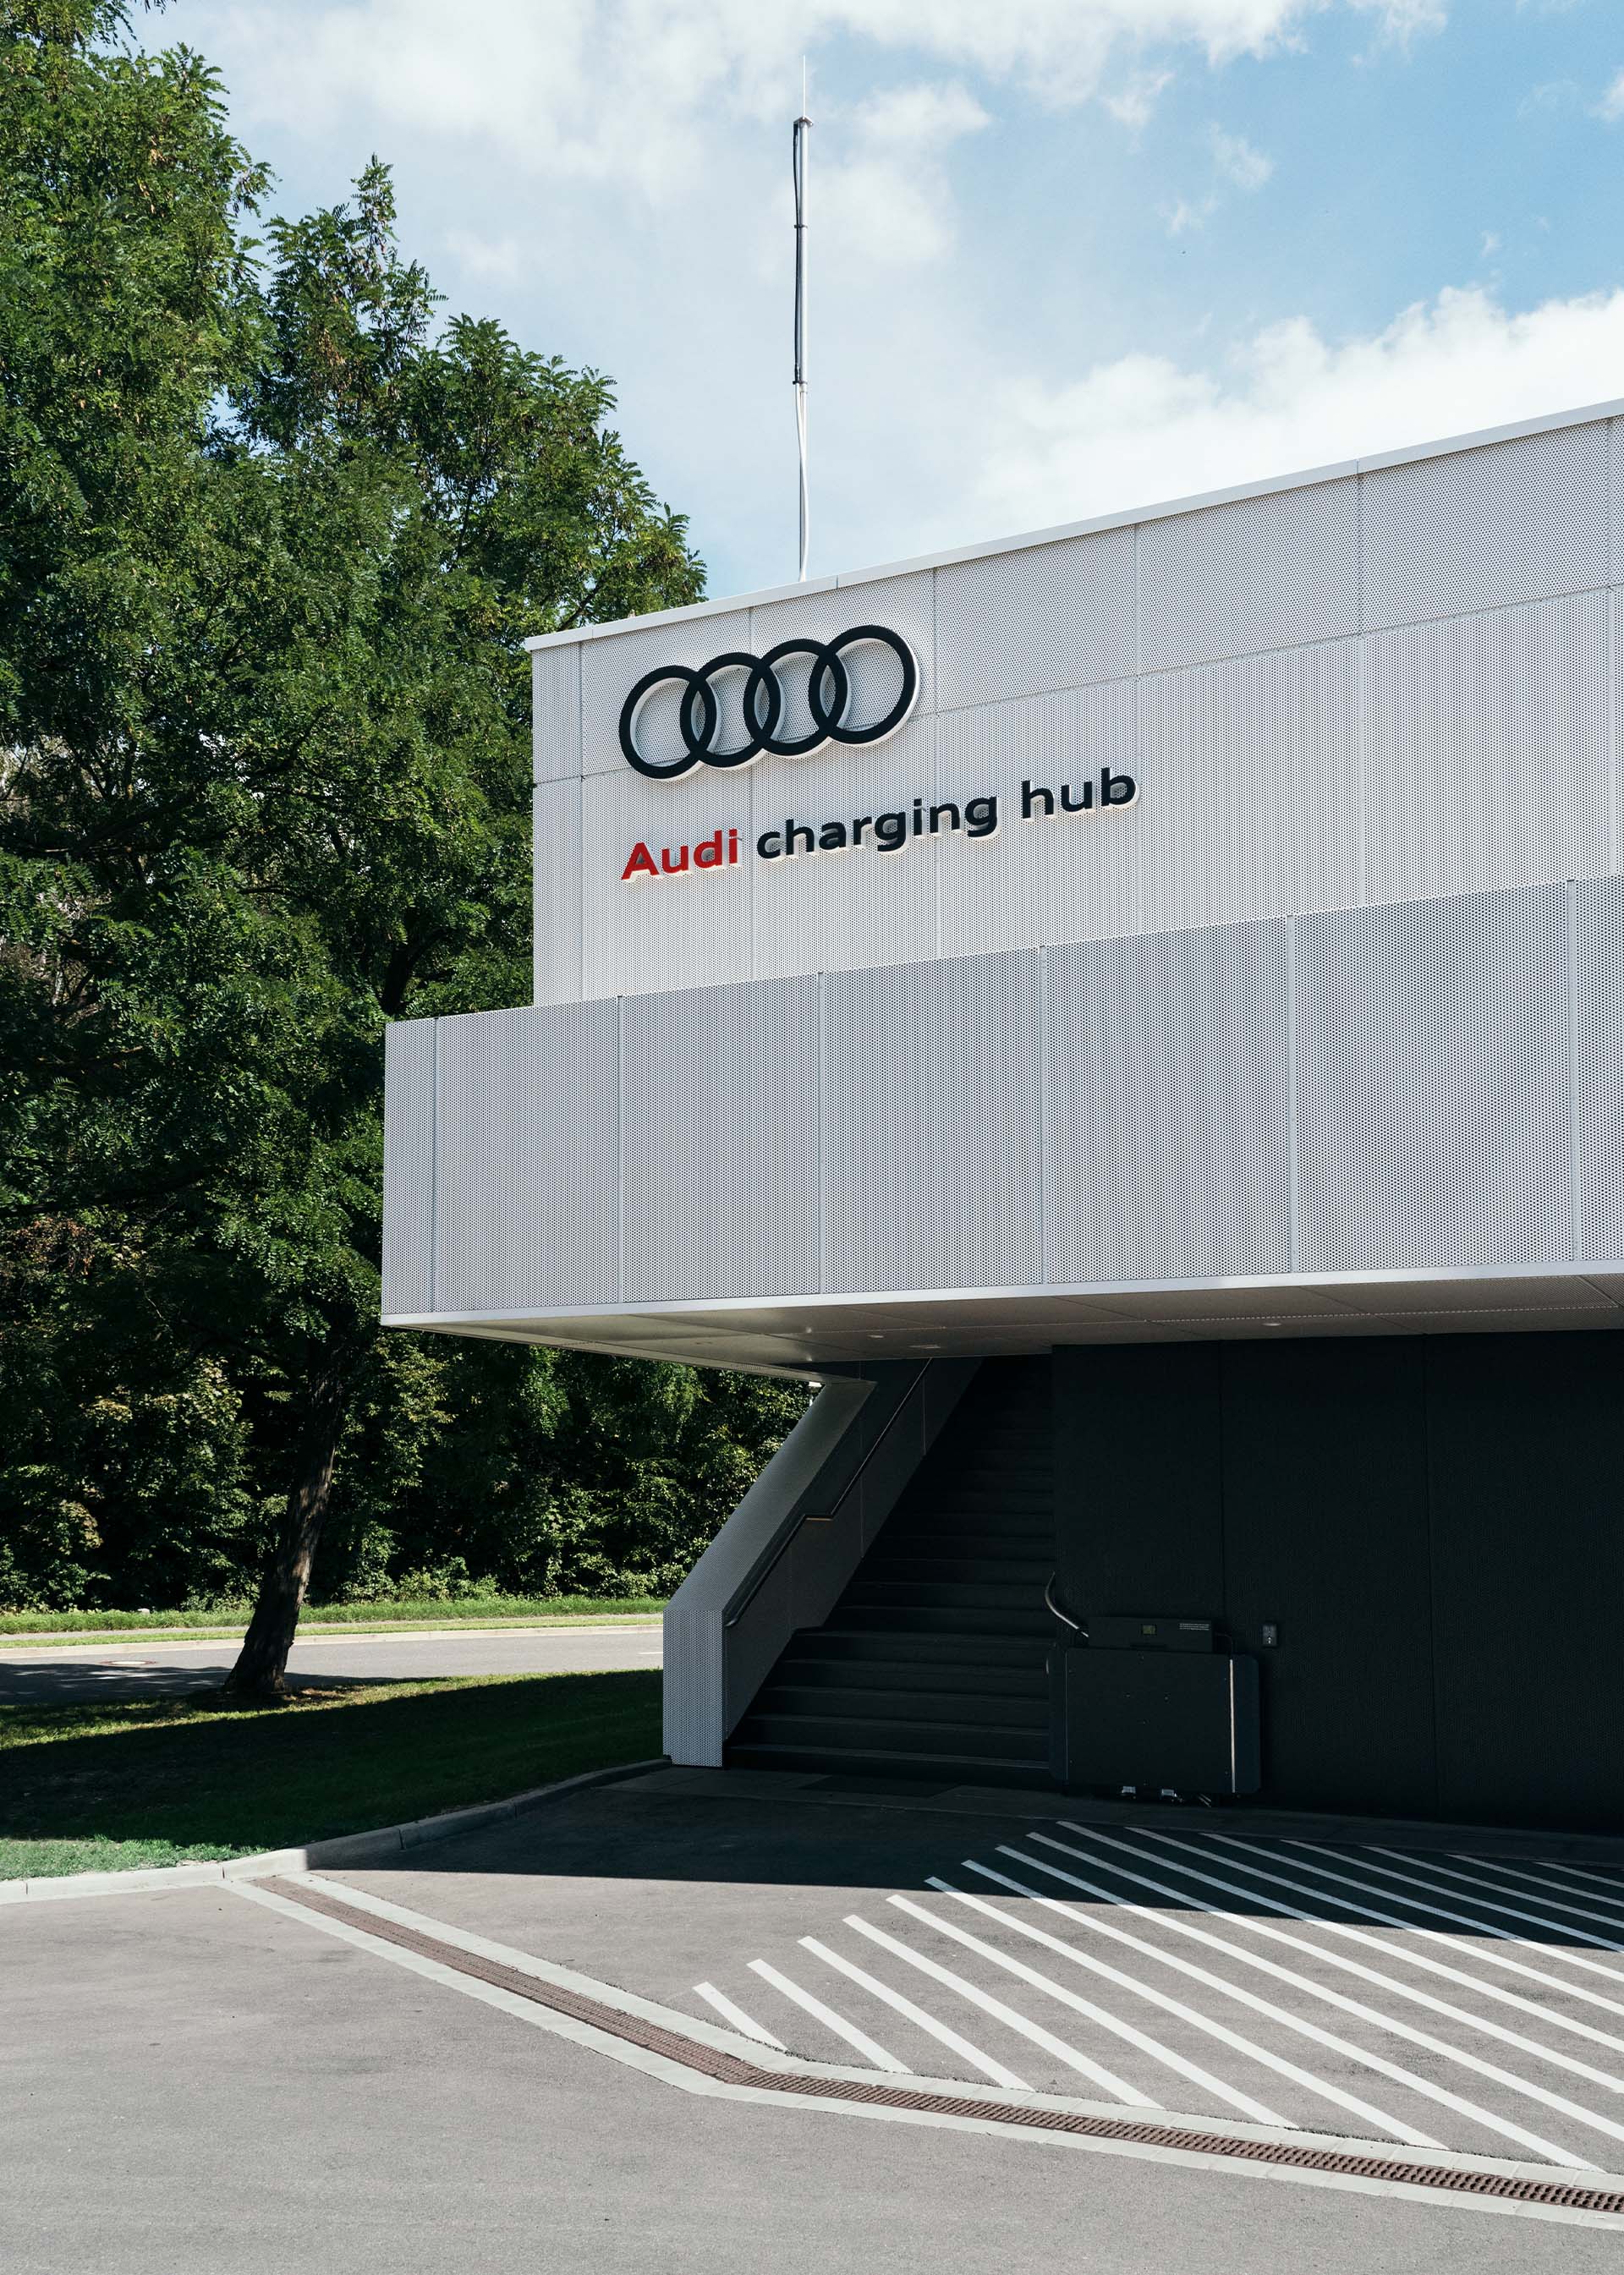 Entrance area of the Audi charging hub in Nuremberg.